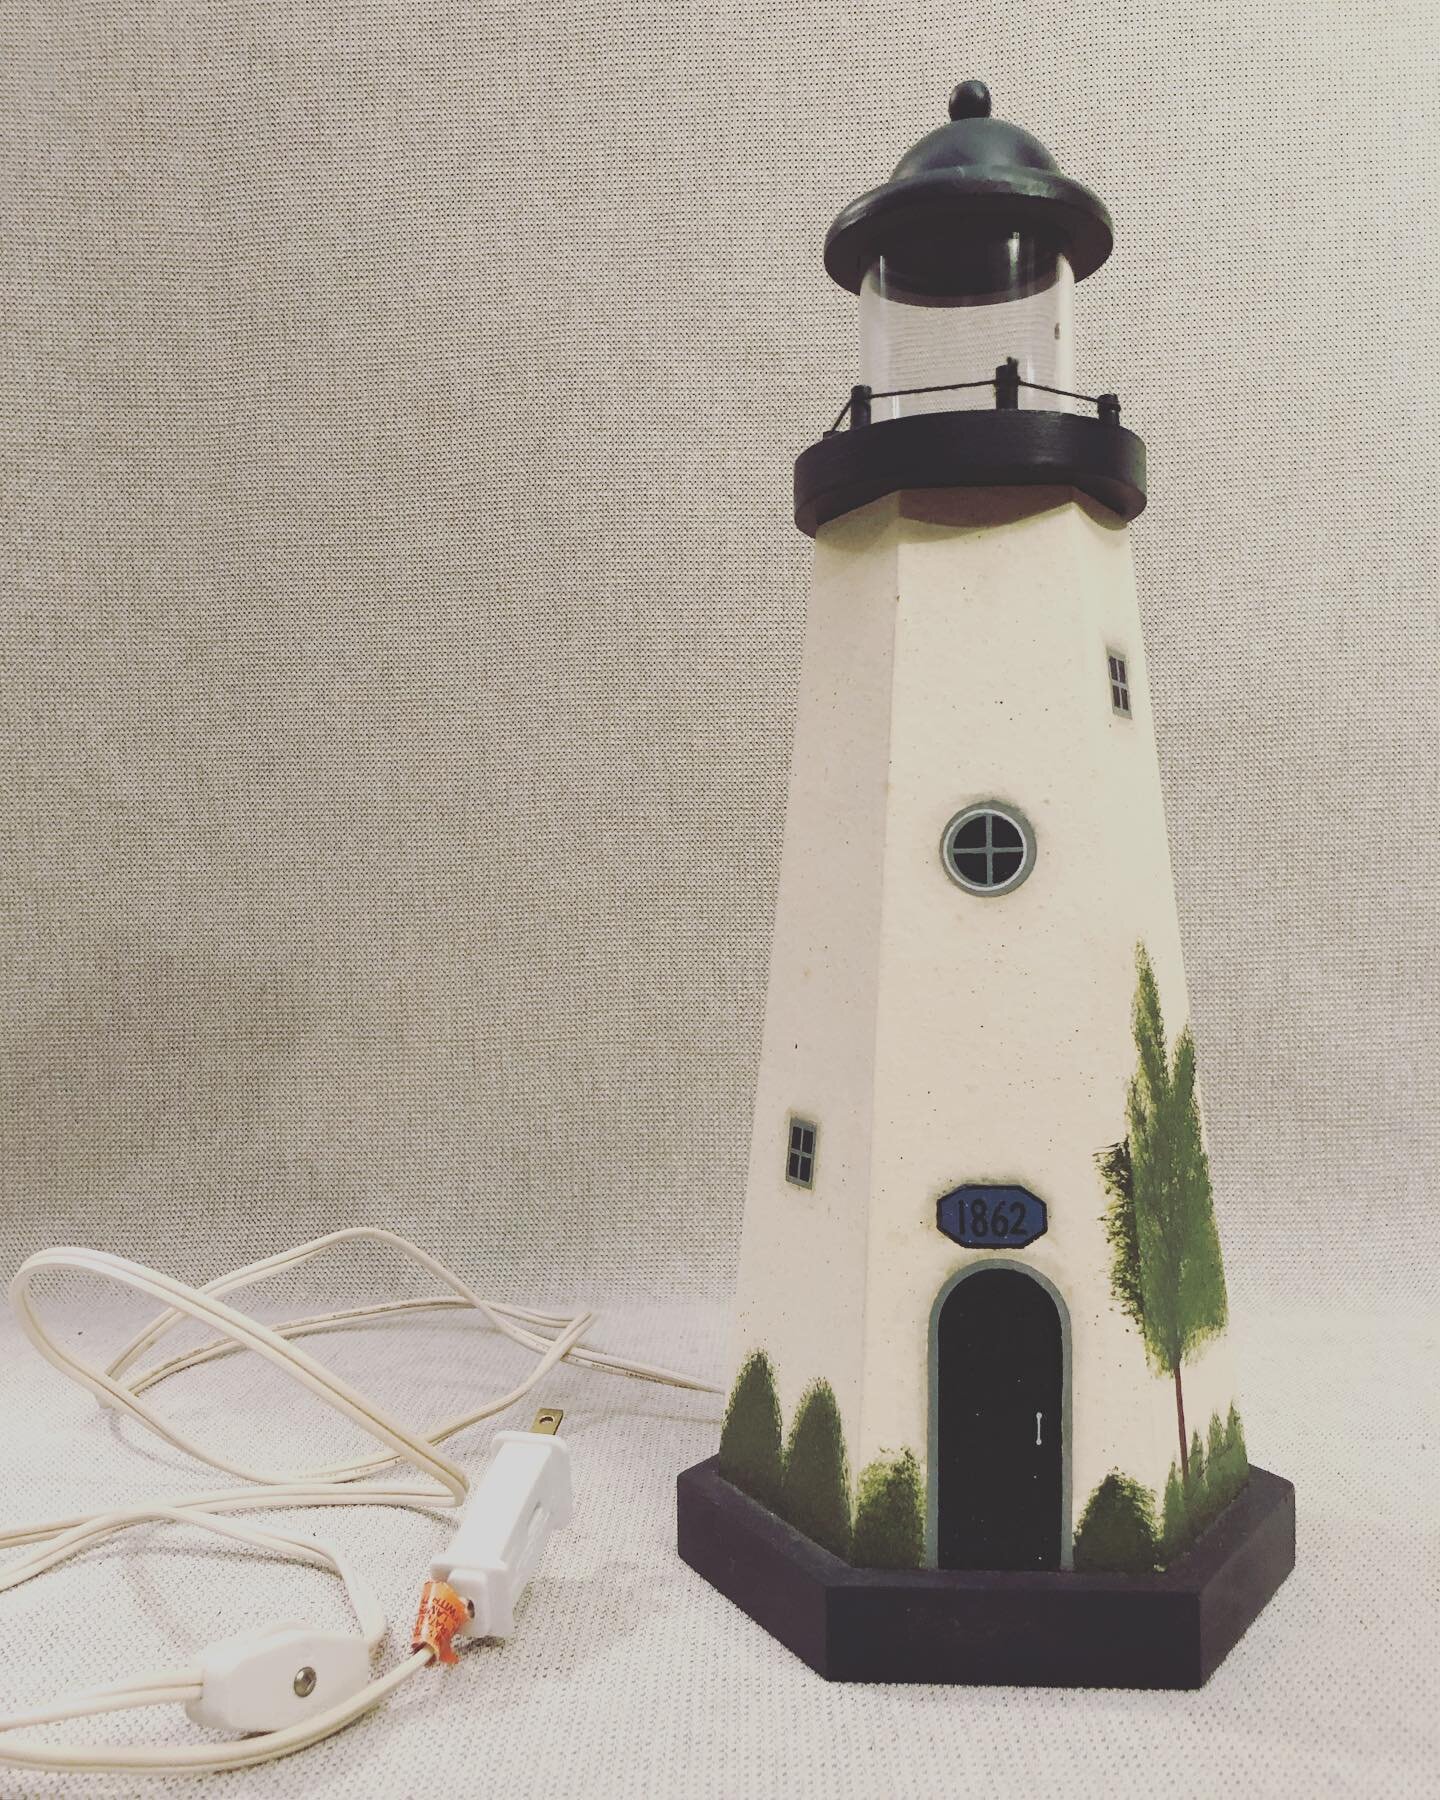 Lighthouse lamp #lighthouse #lamp #coast #newengland #fog #nightlight #nautical #sea #ungratefulgranddaughter 

#forsale #garagesale #fleamarket #selling #stuff #secondhand #reuse #reduce #recycle #upcycle #connecticut #grandma #grandmother #coastalg